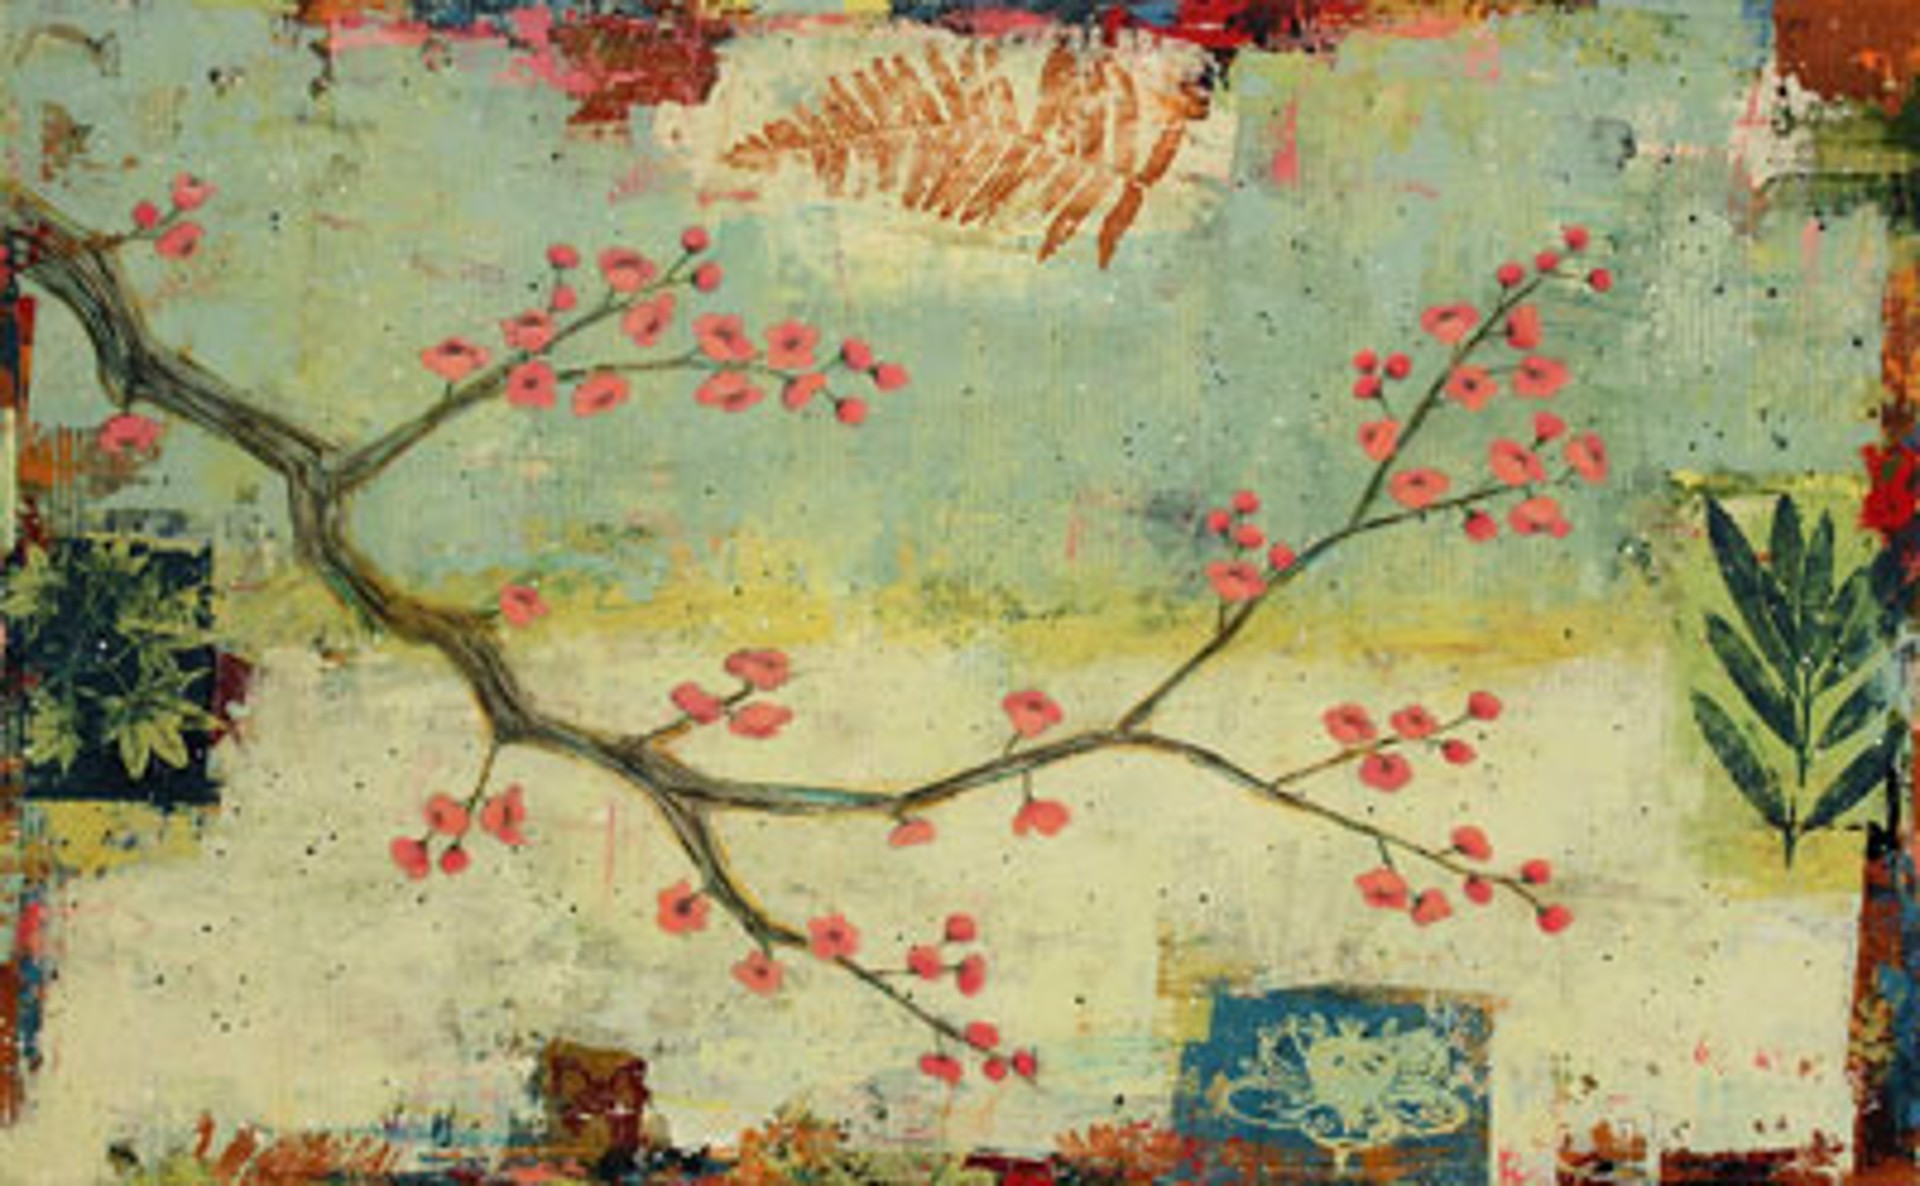 Flowering Cherry by Paul Brigham